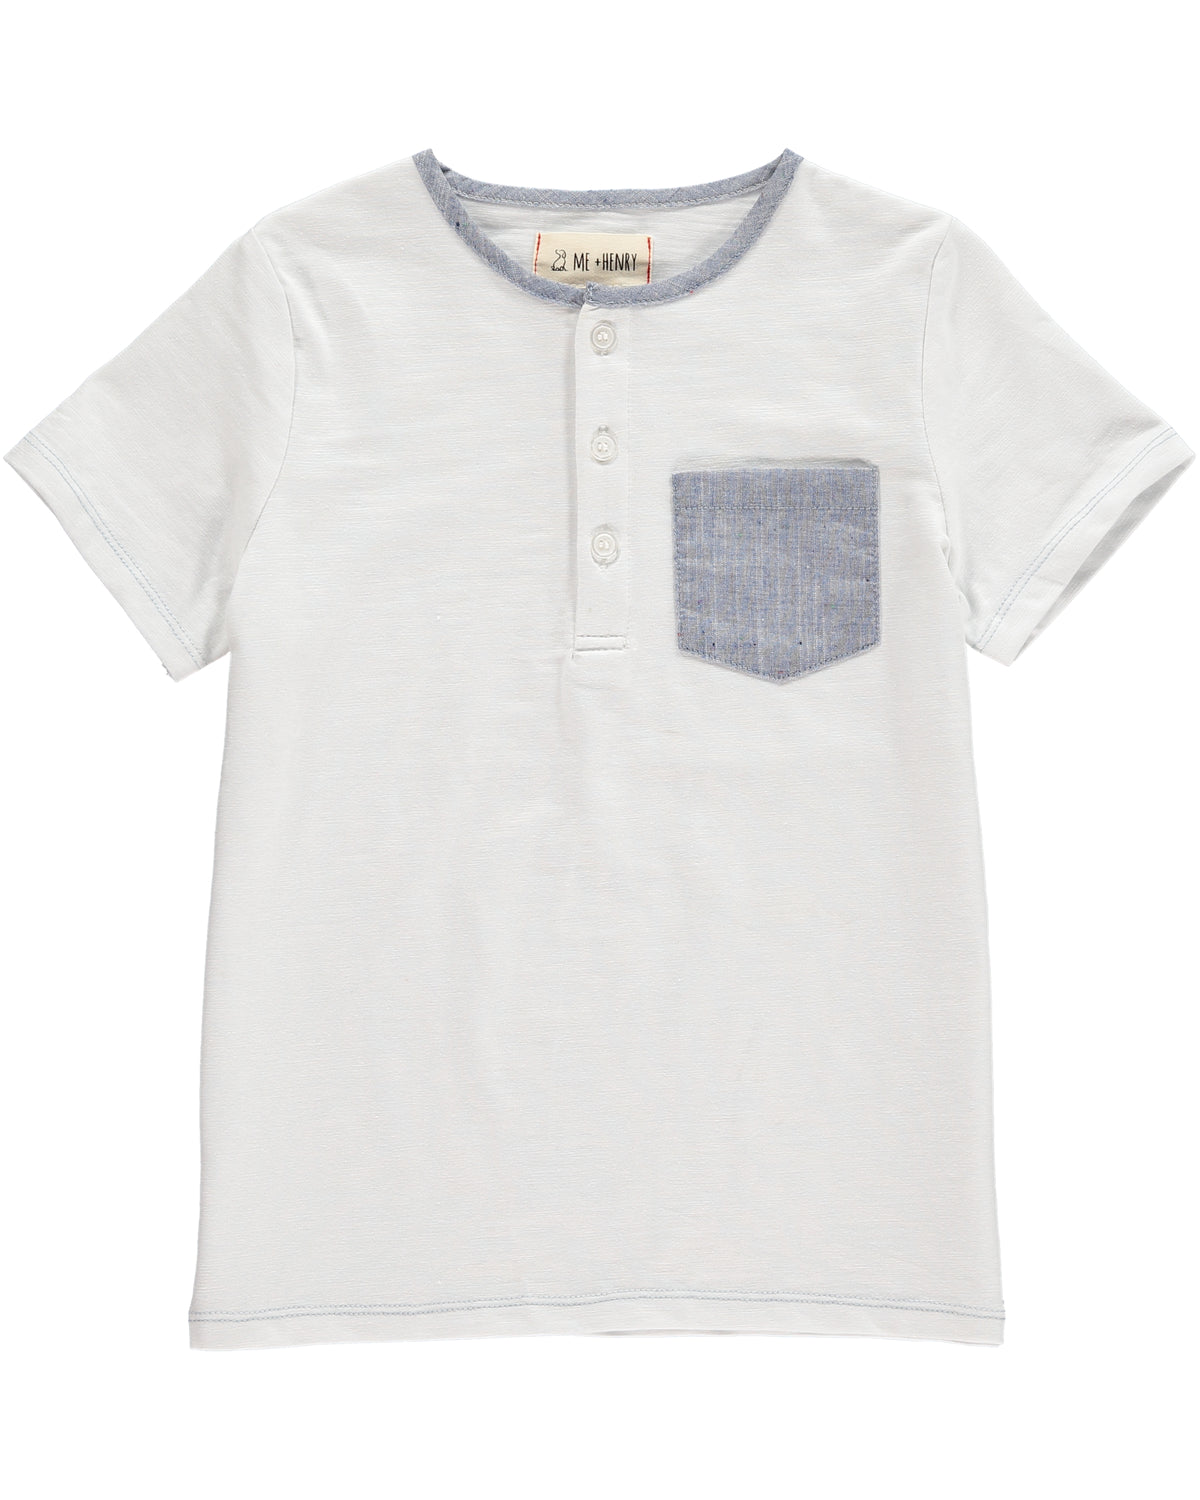 Boys Cotton White T-Shirt